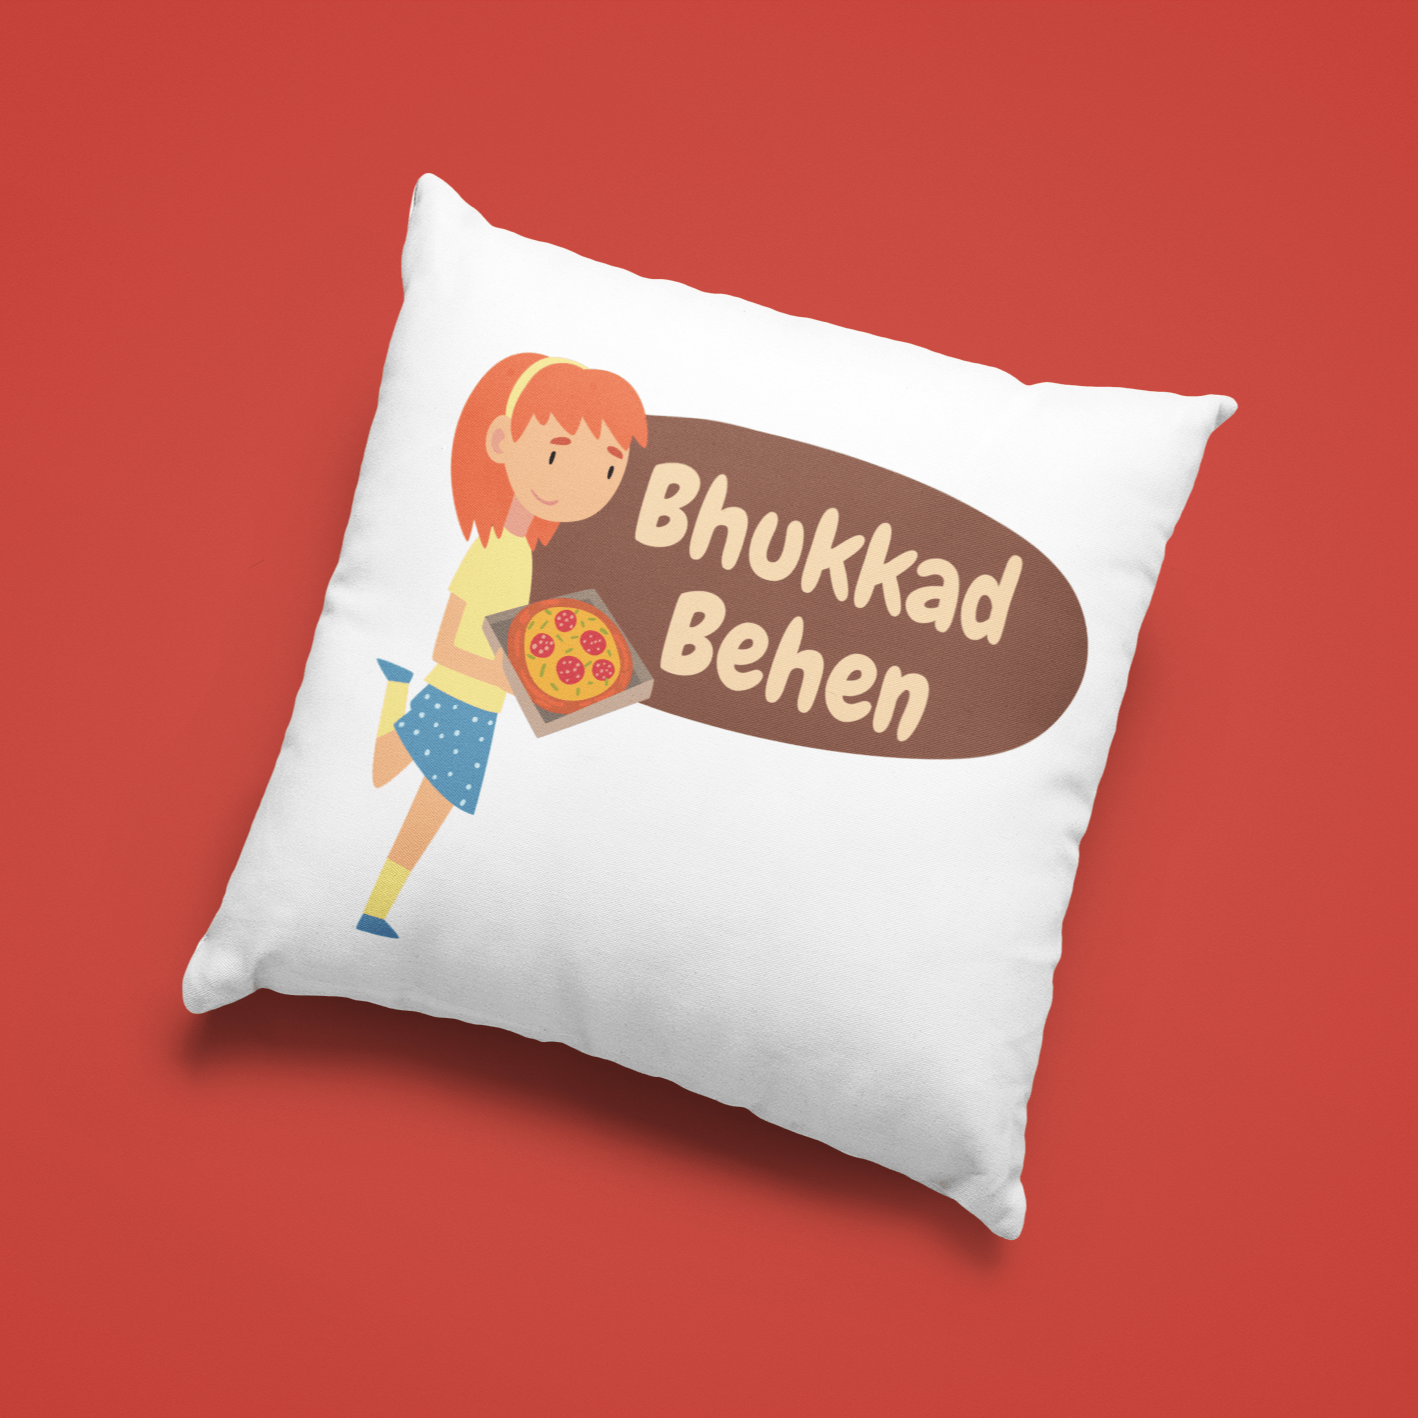 Bhukkad Behen Pillow For Sister